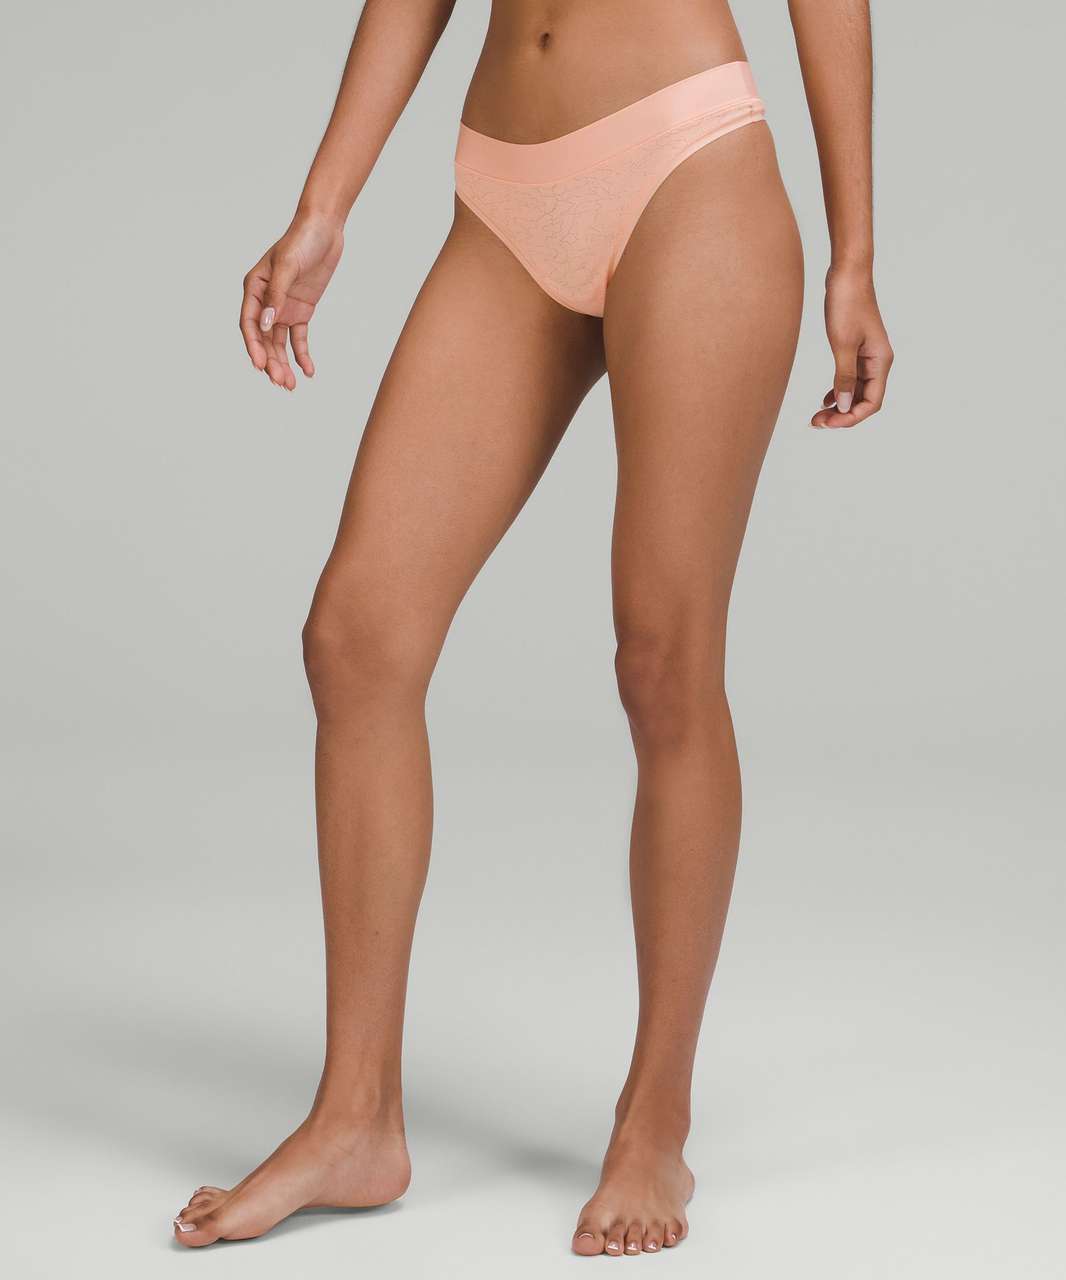 Lululemon UnderEase Lace Mid-Rise Thong Underwear - Malibu Peach / Lace